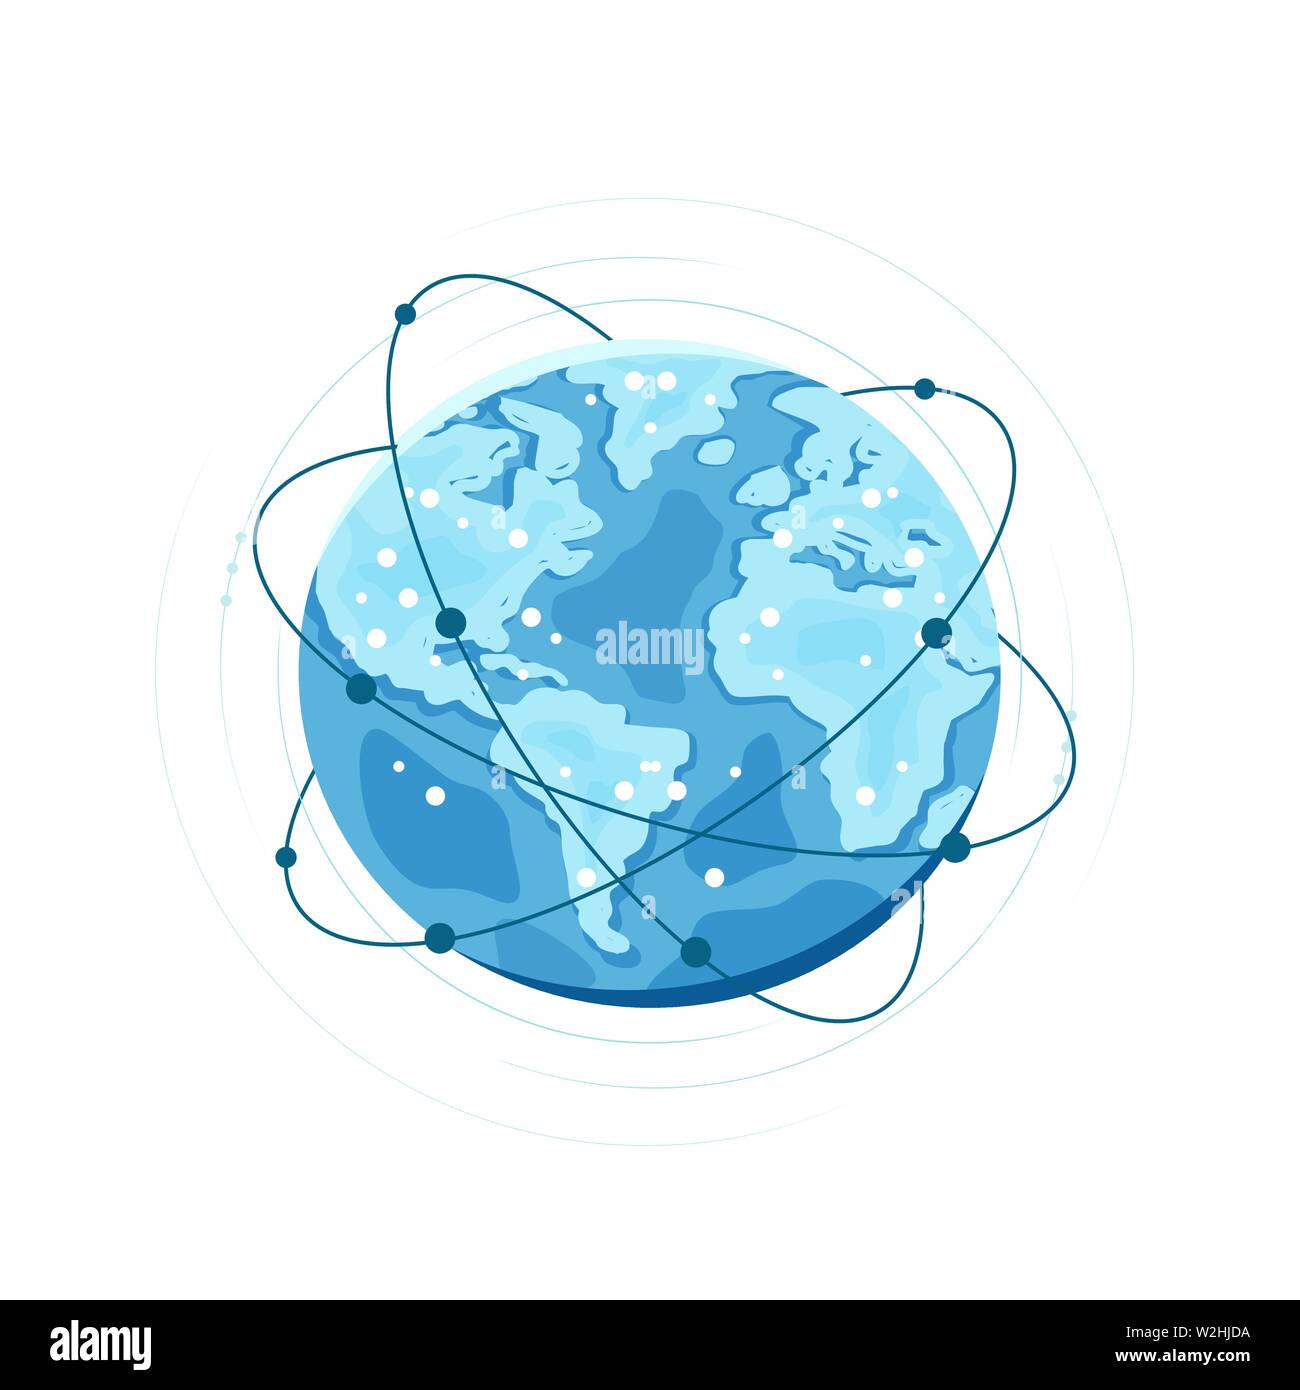 Global network connection. Digital world, technology vector illustration Stock Vector